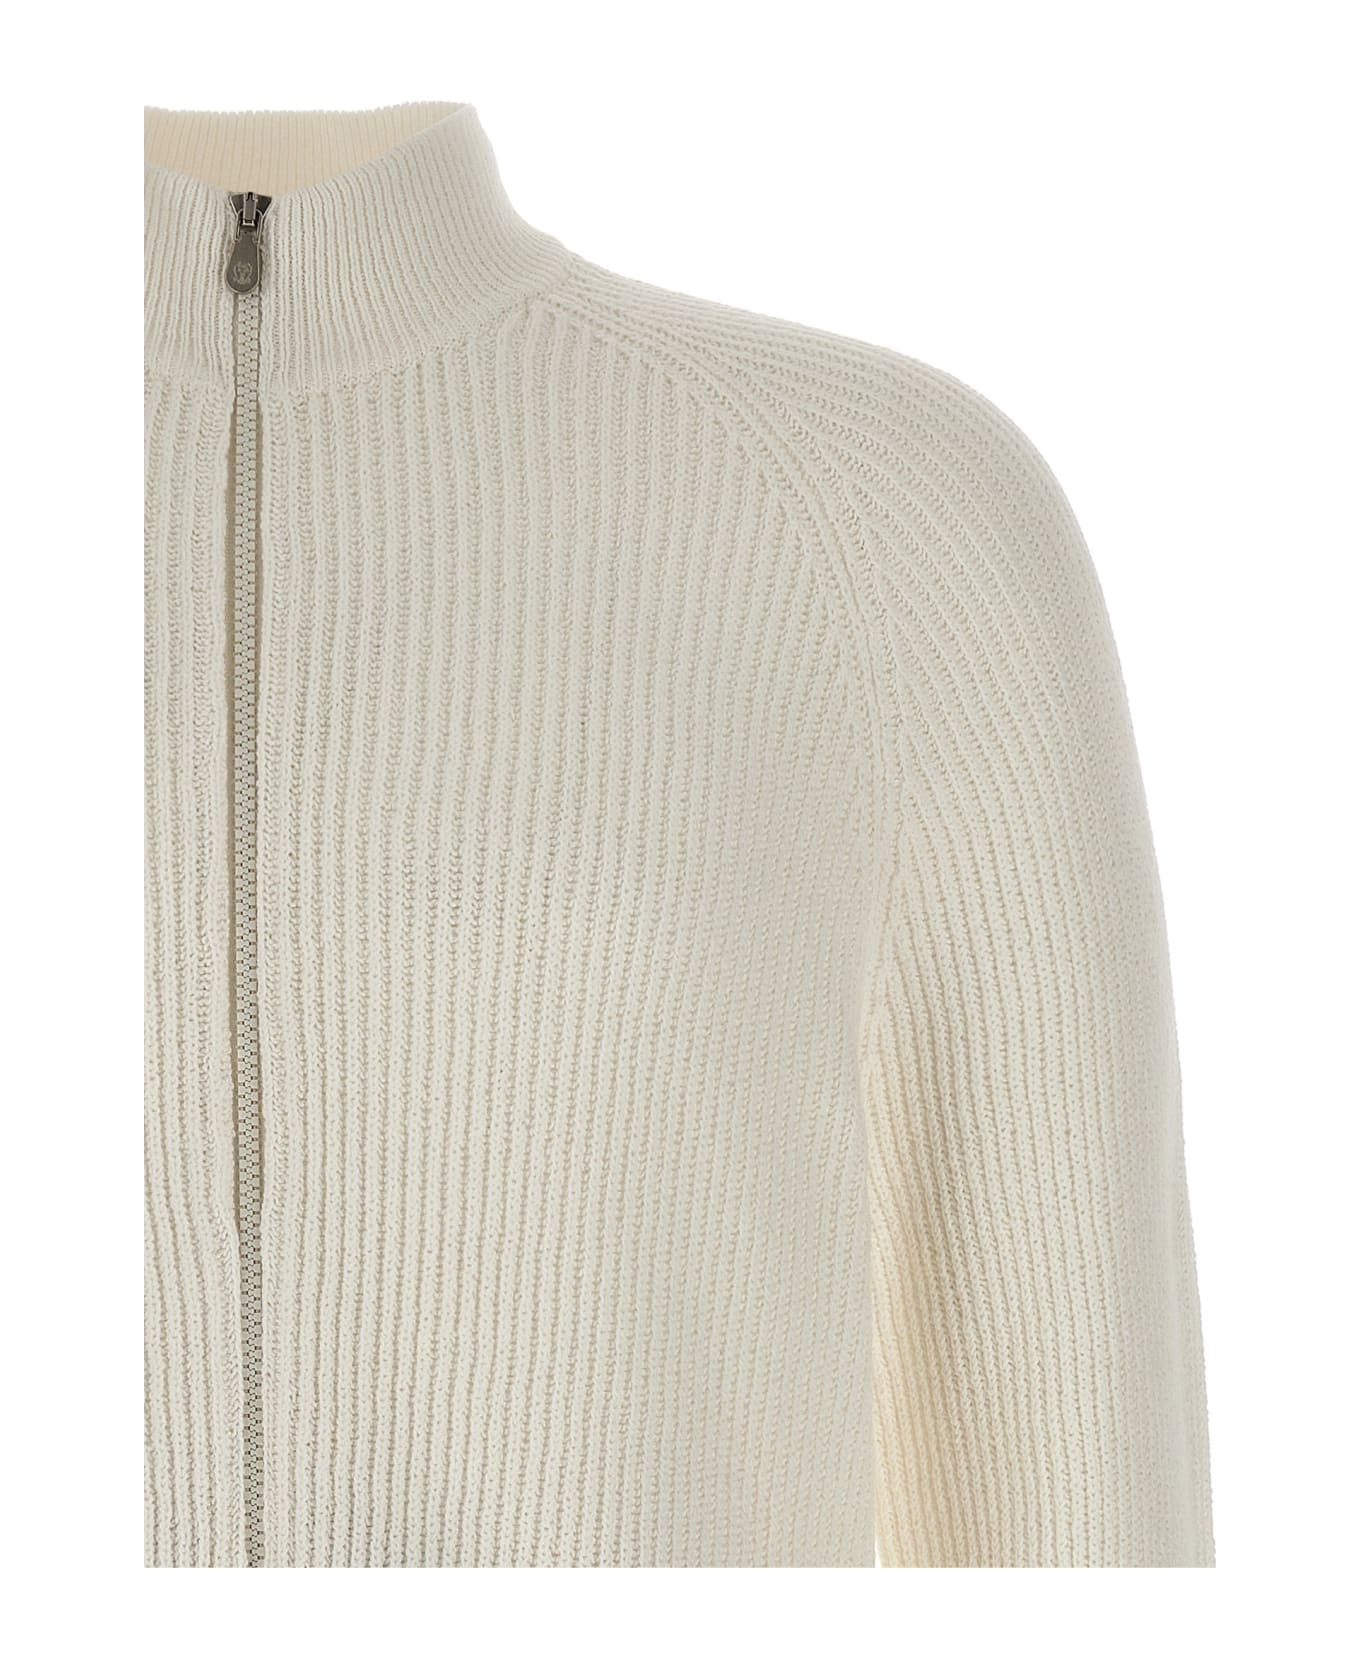 Brunello Cucinelli Zip Sweater - White カーディガン